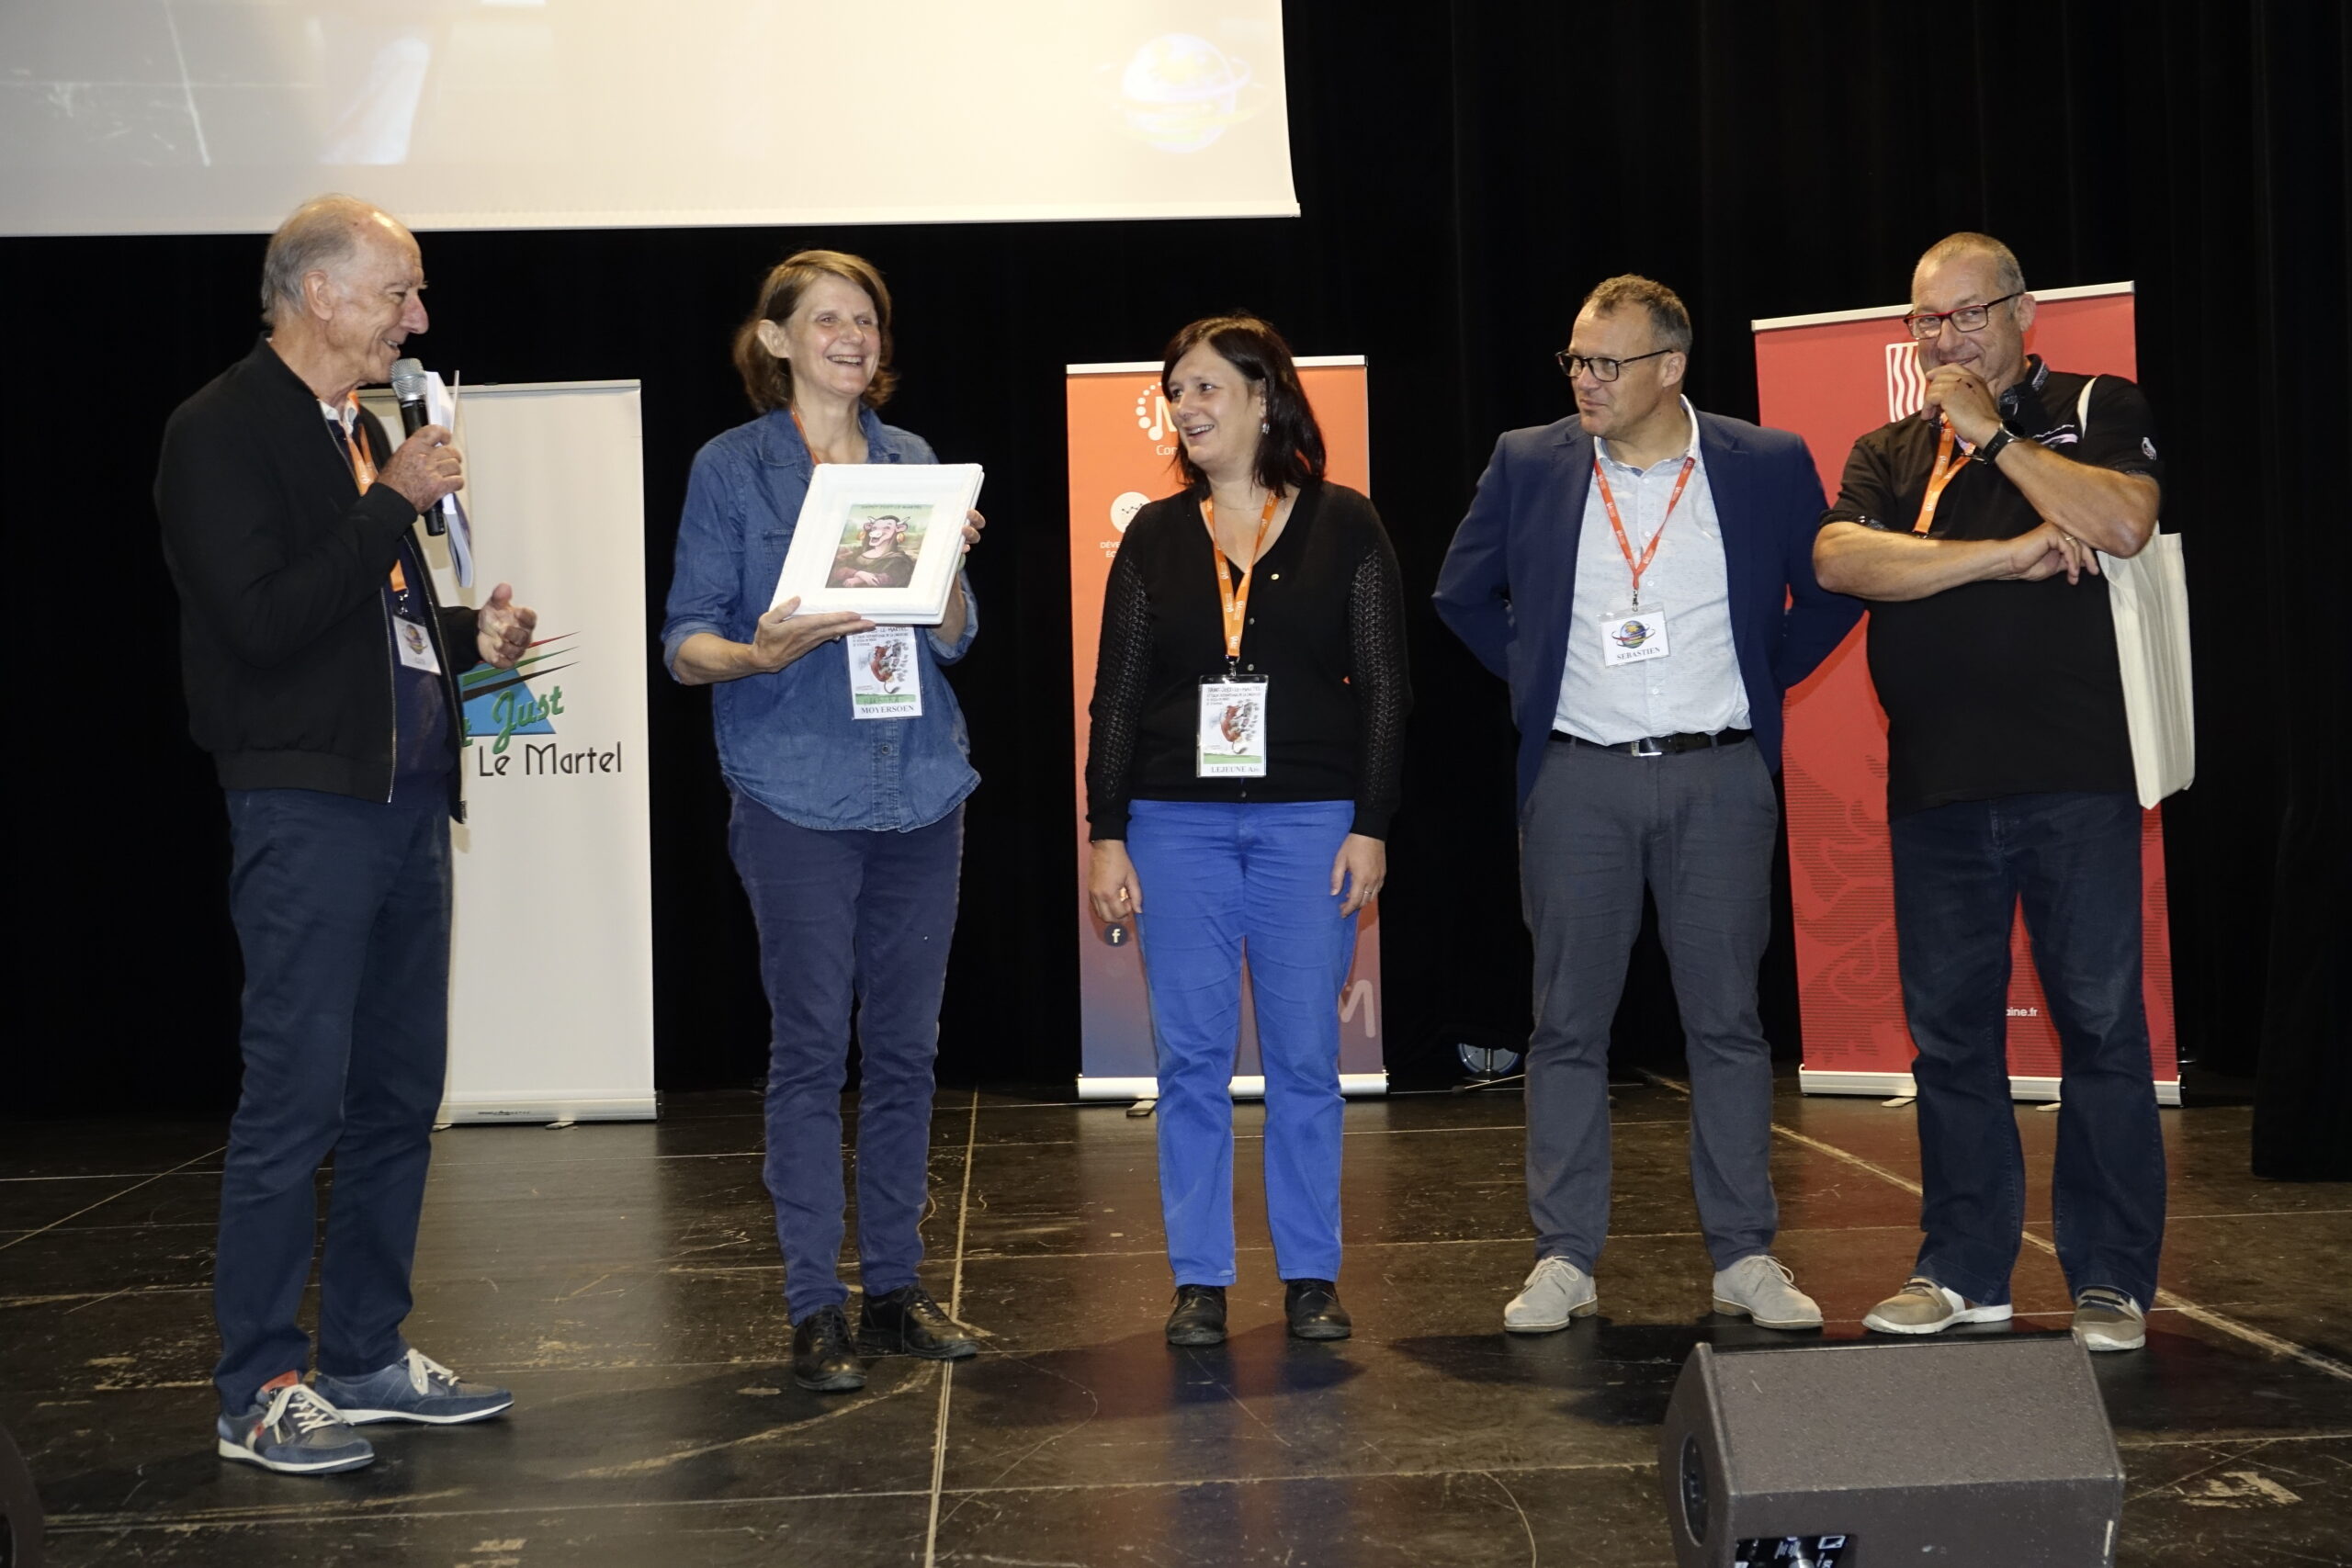 The Cartooning for Peace team receiving the « Crayon de Porcelaine » prize